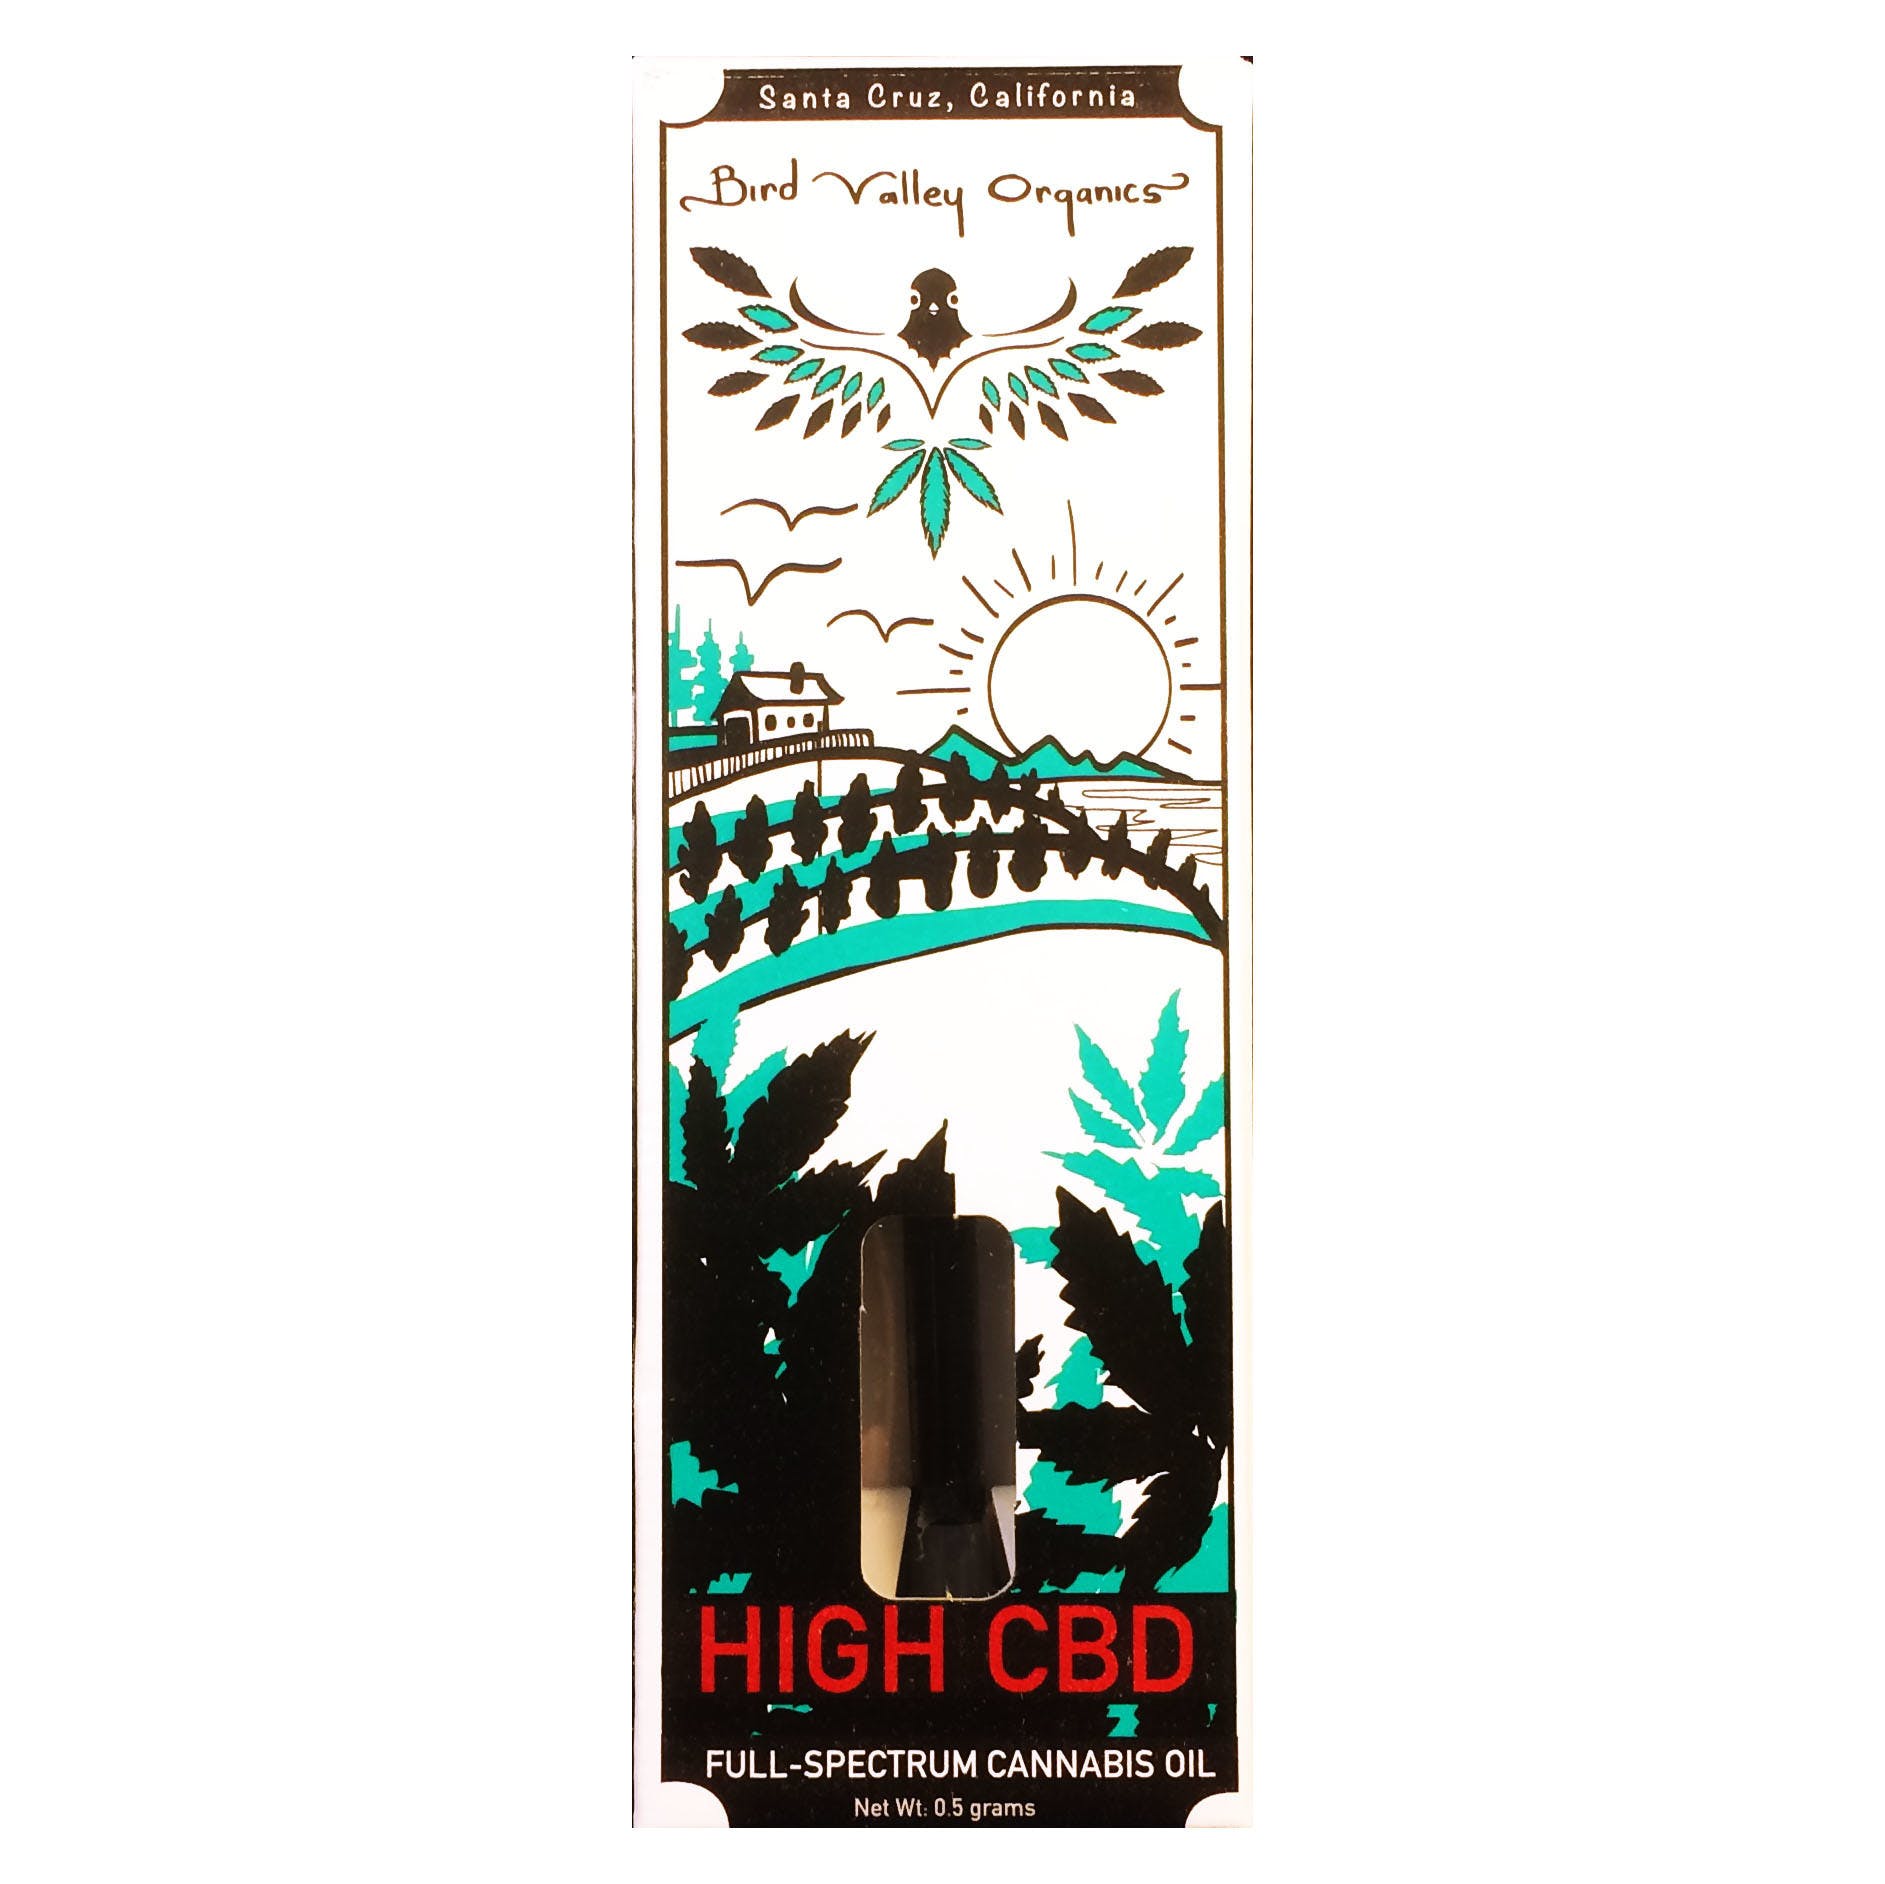 High CBD Cannabis Oil Syringe by Bird Valley Organics